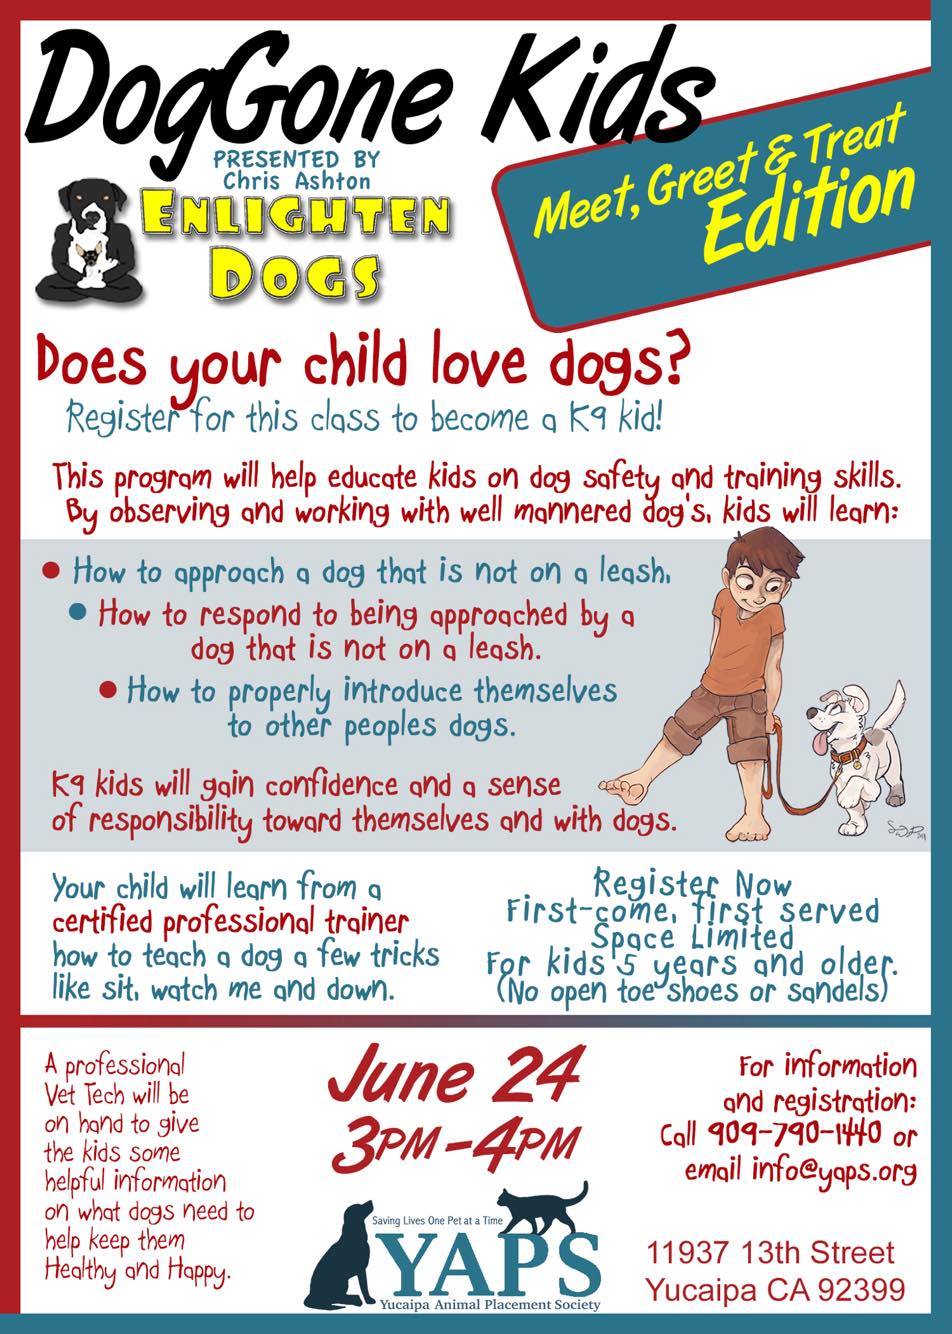 DogGone Kids Dog Safety Class for Kids Saturday June